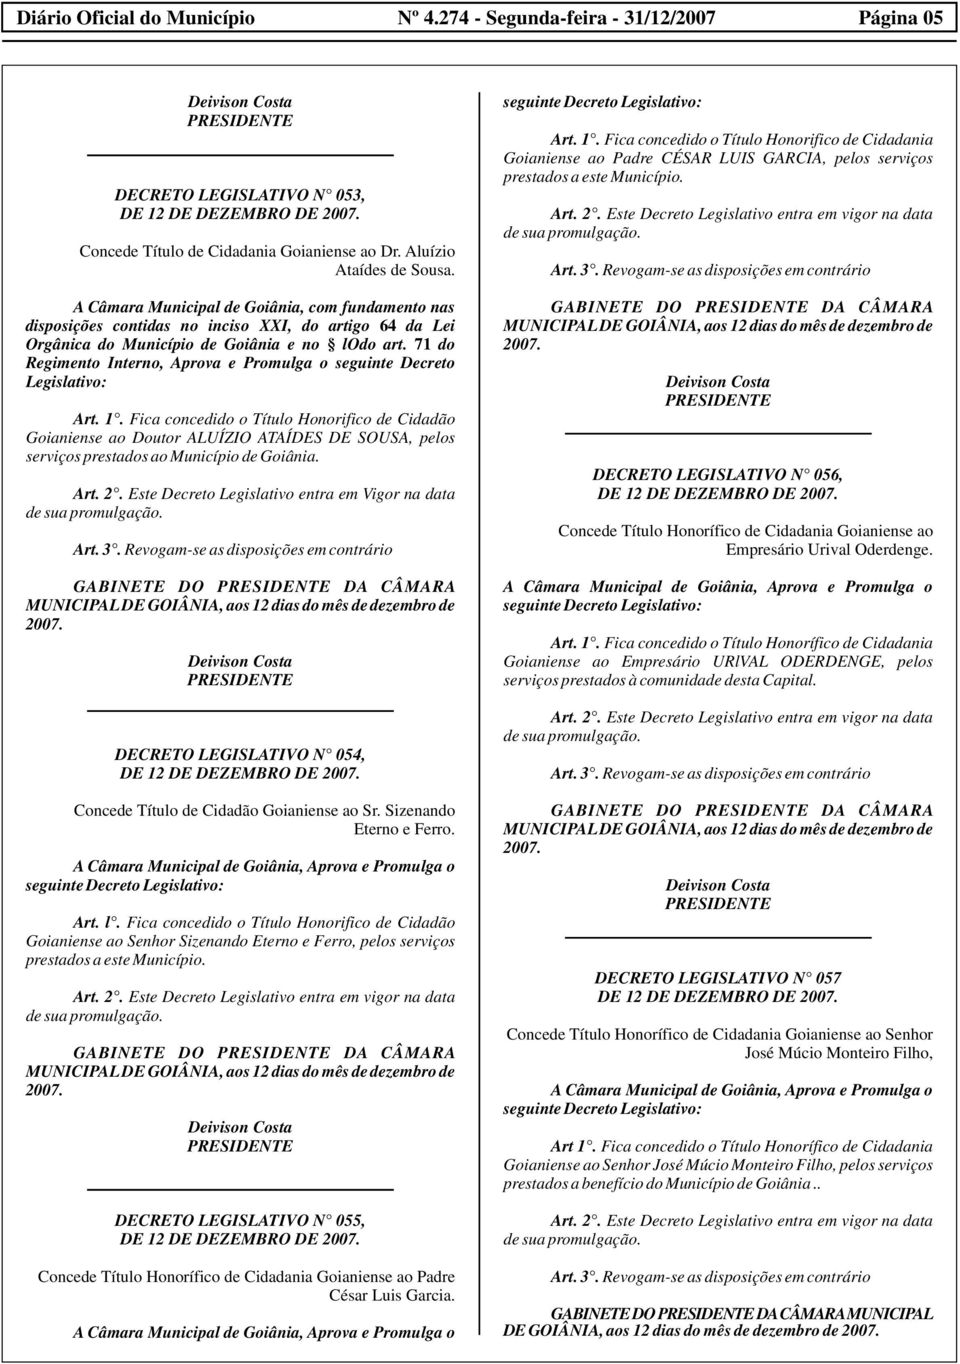 71 do Regimento Interno, Aprova e Promulga o seguinte Decreto Legislativo: Art. 1.